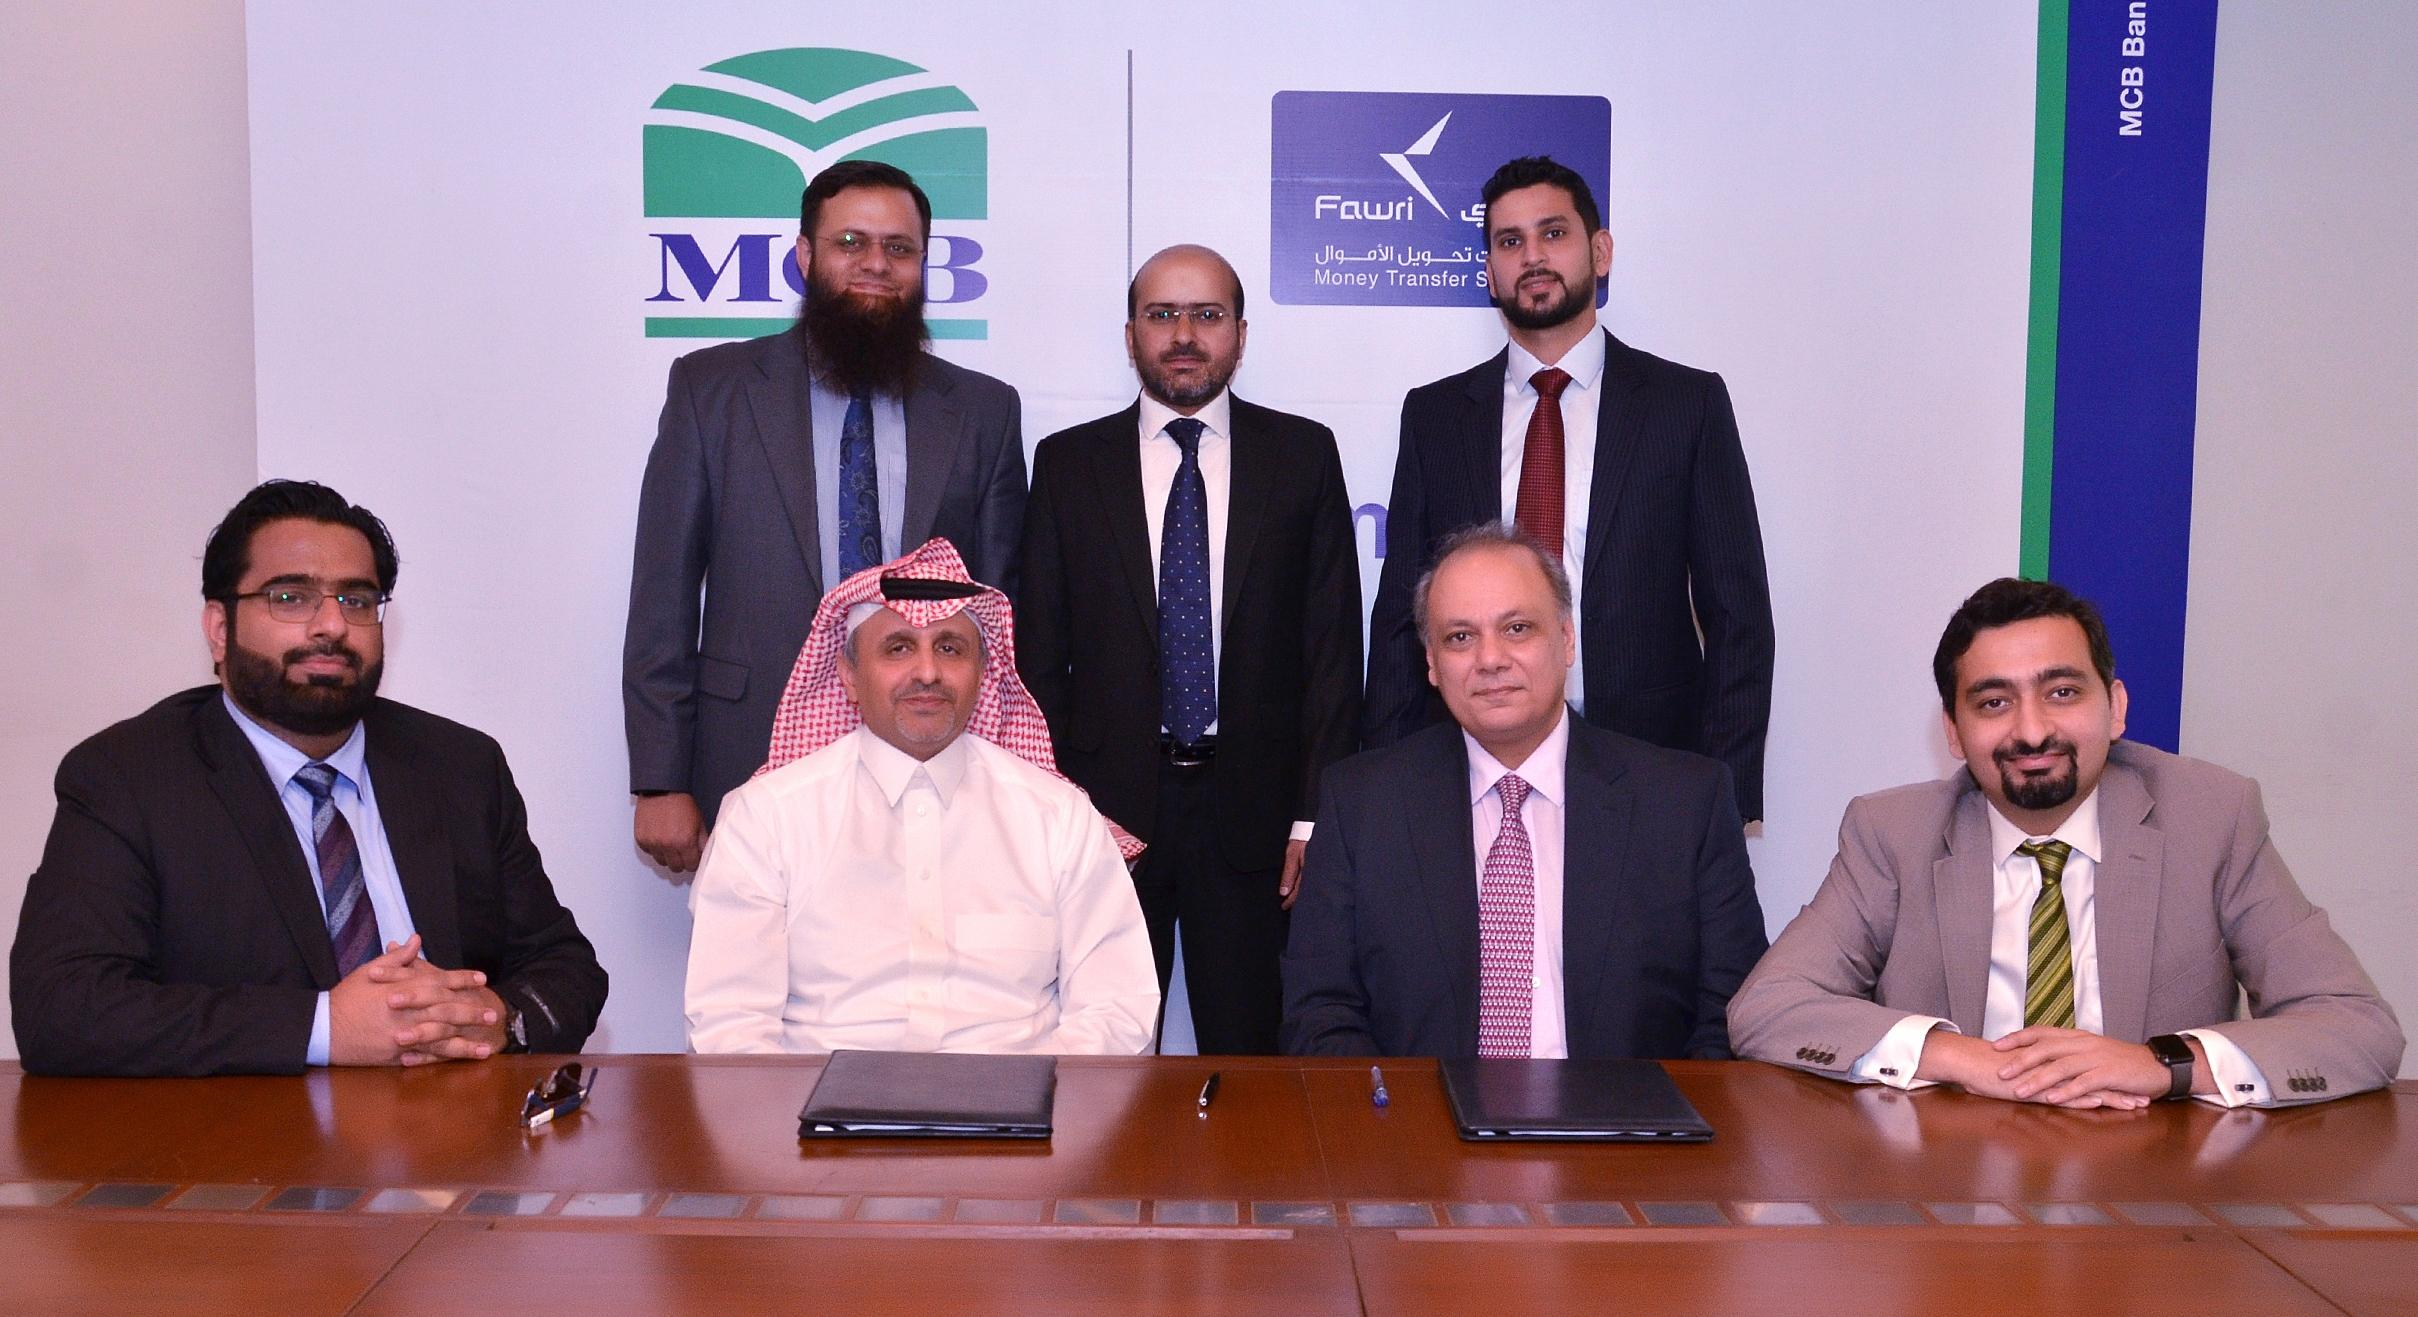 MCB Bank partners with Bank Al Jazira (Fawri) to launch international money transfers to Pakistan